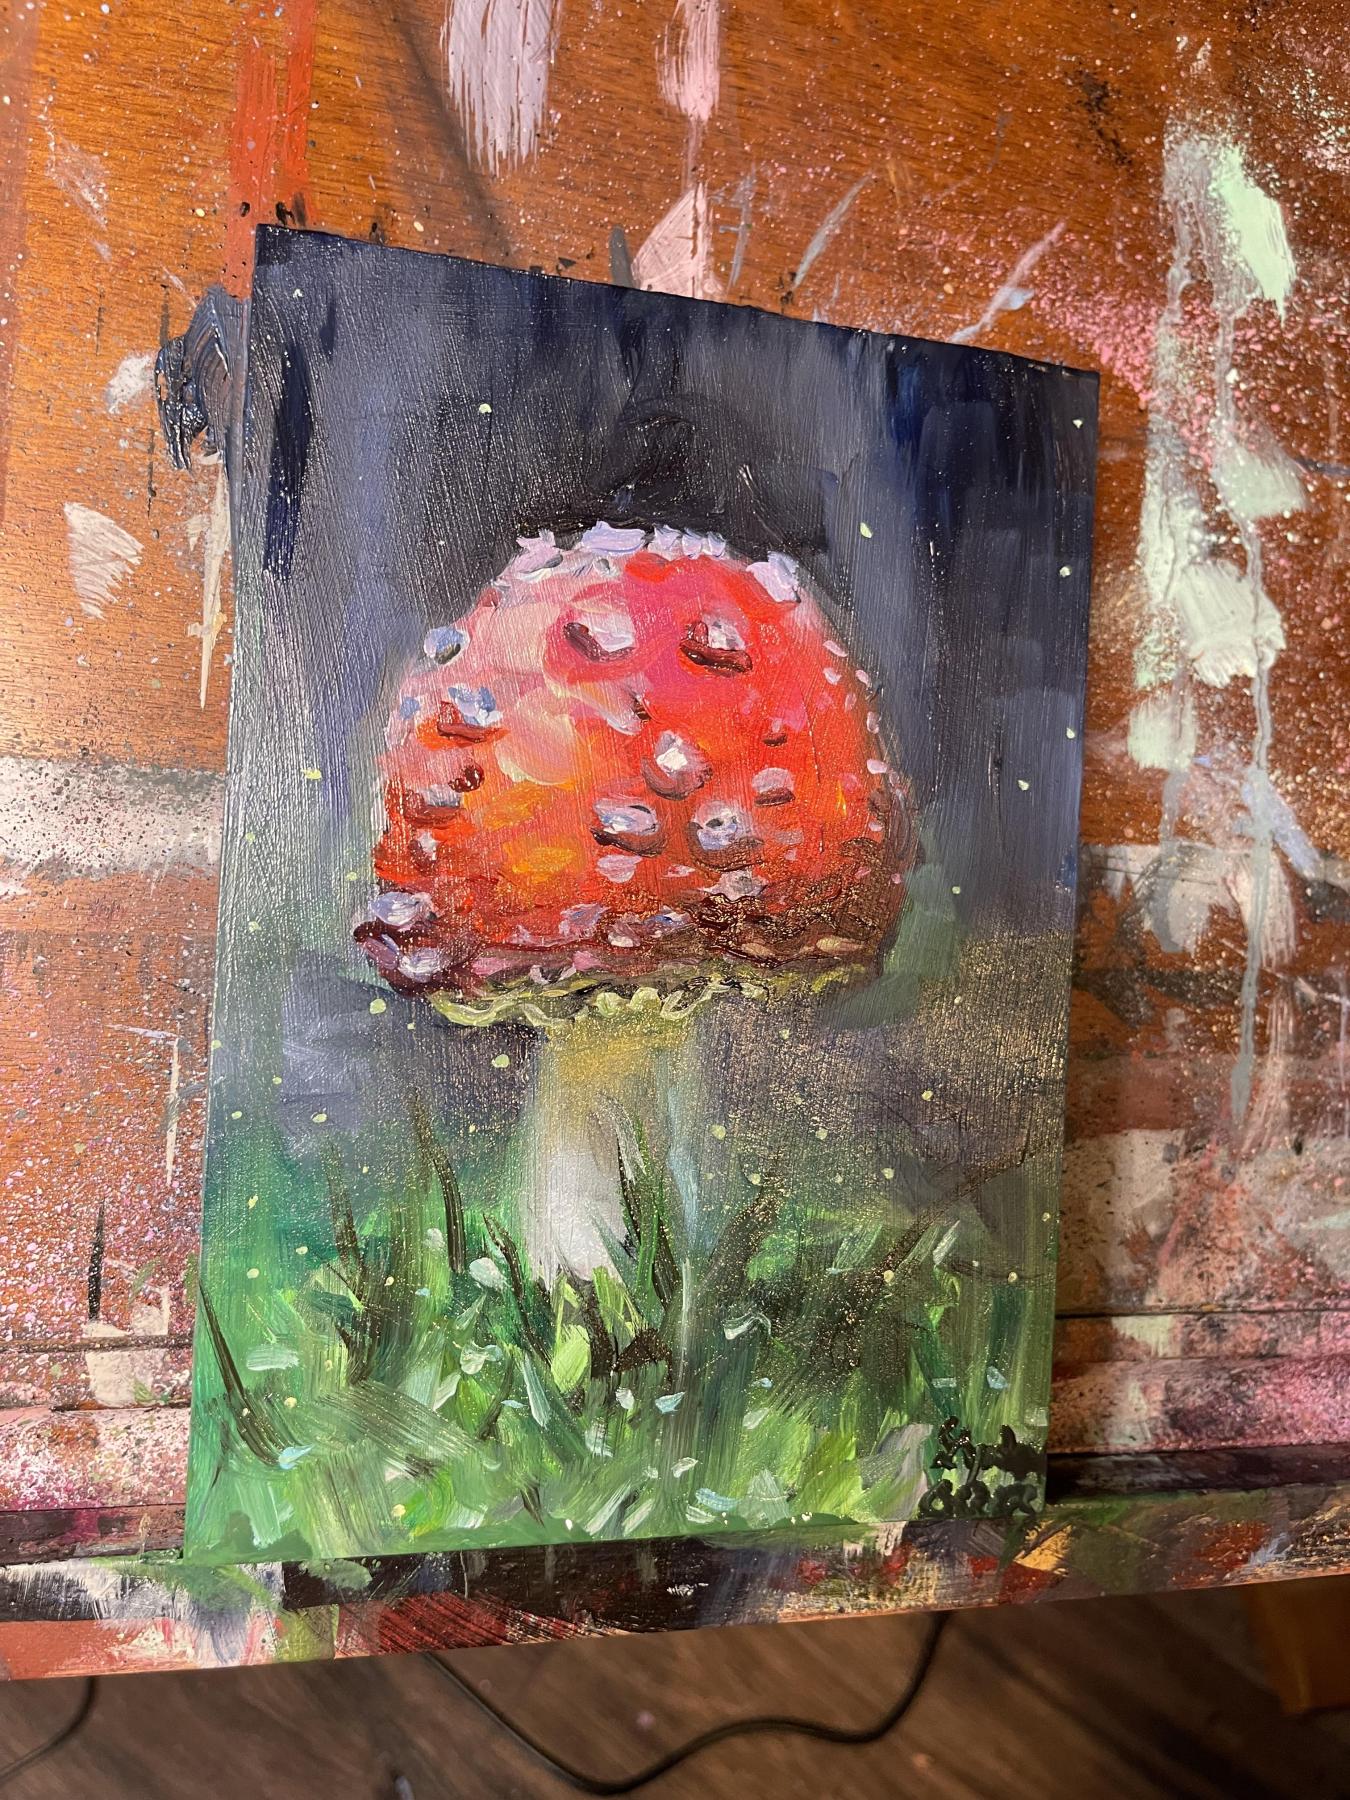 A painting of a fly amanita mushroom.